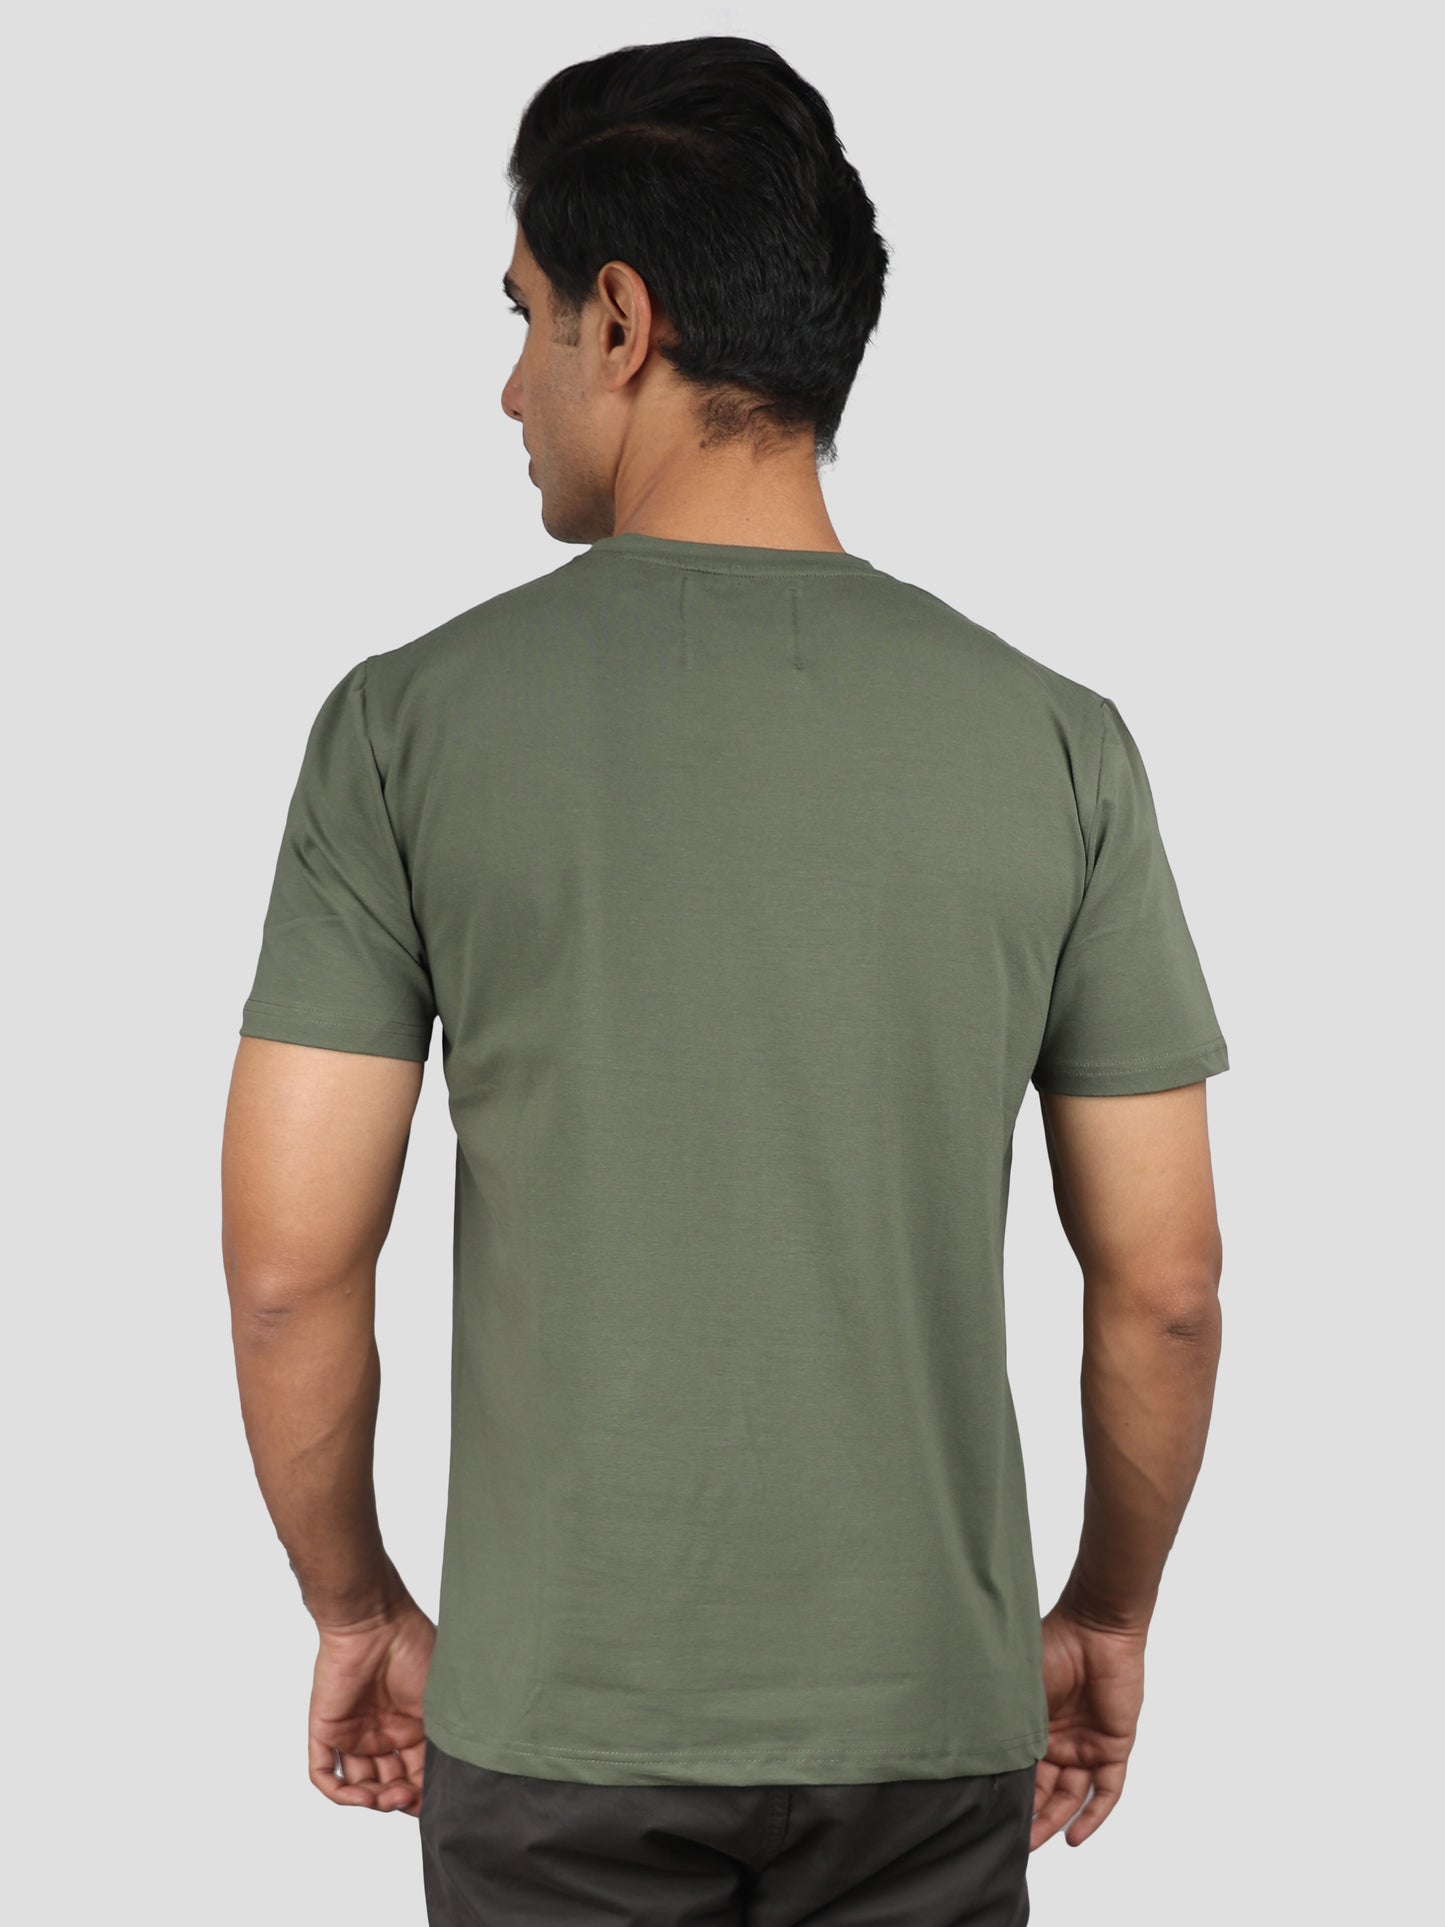 Military Green Super Stretch Round Neck Cotton Tshirt for men